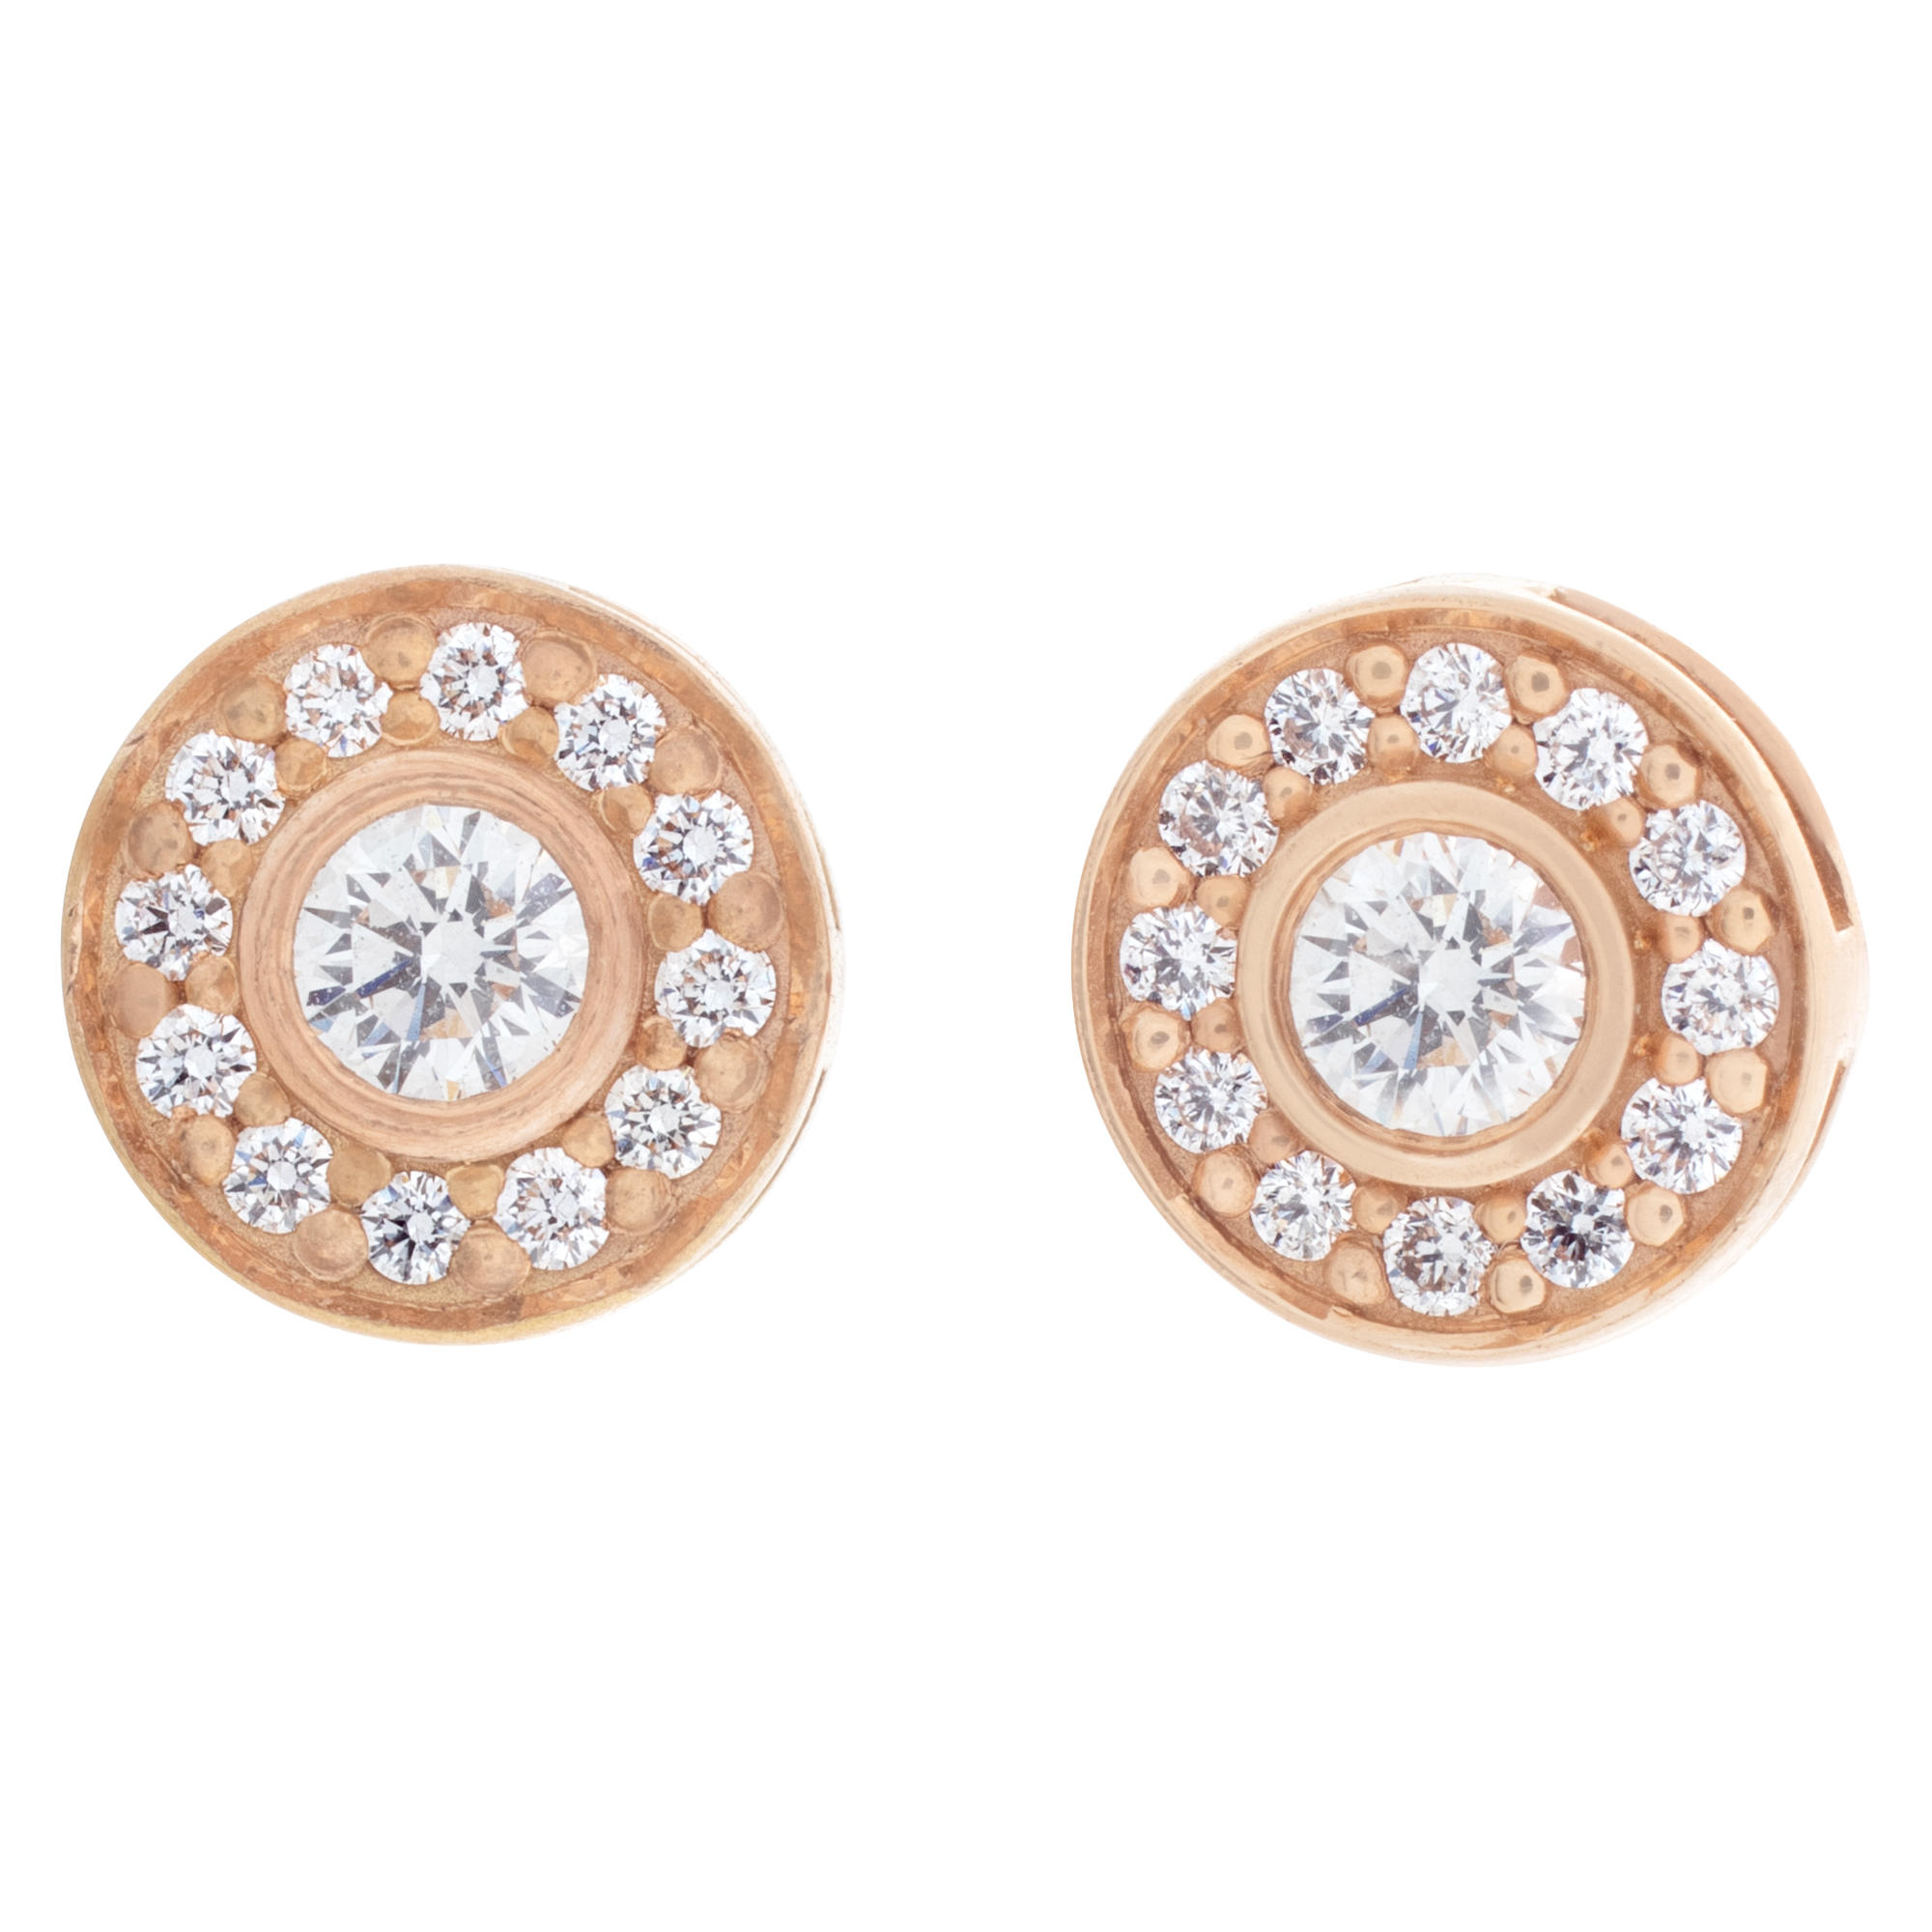 Tffany & Co. Mini Circlet earrings in 18k rose gold image 1